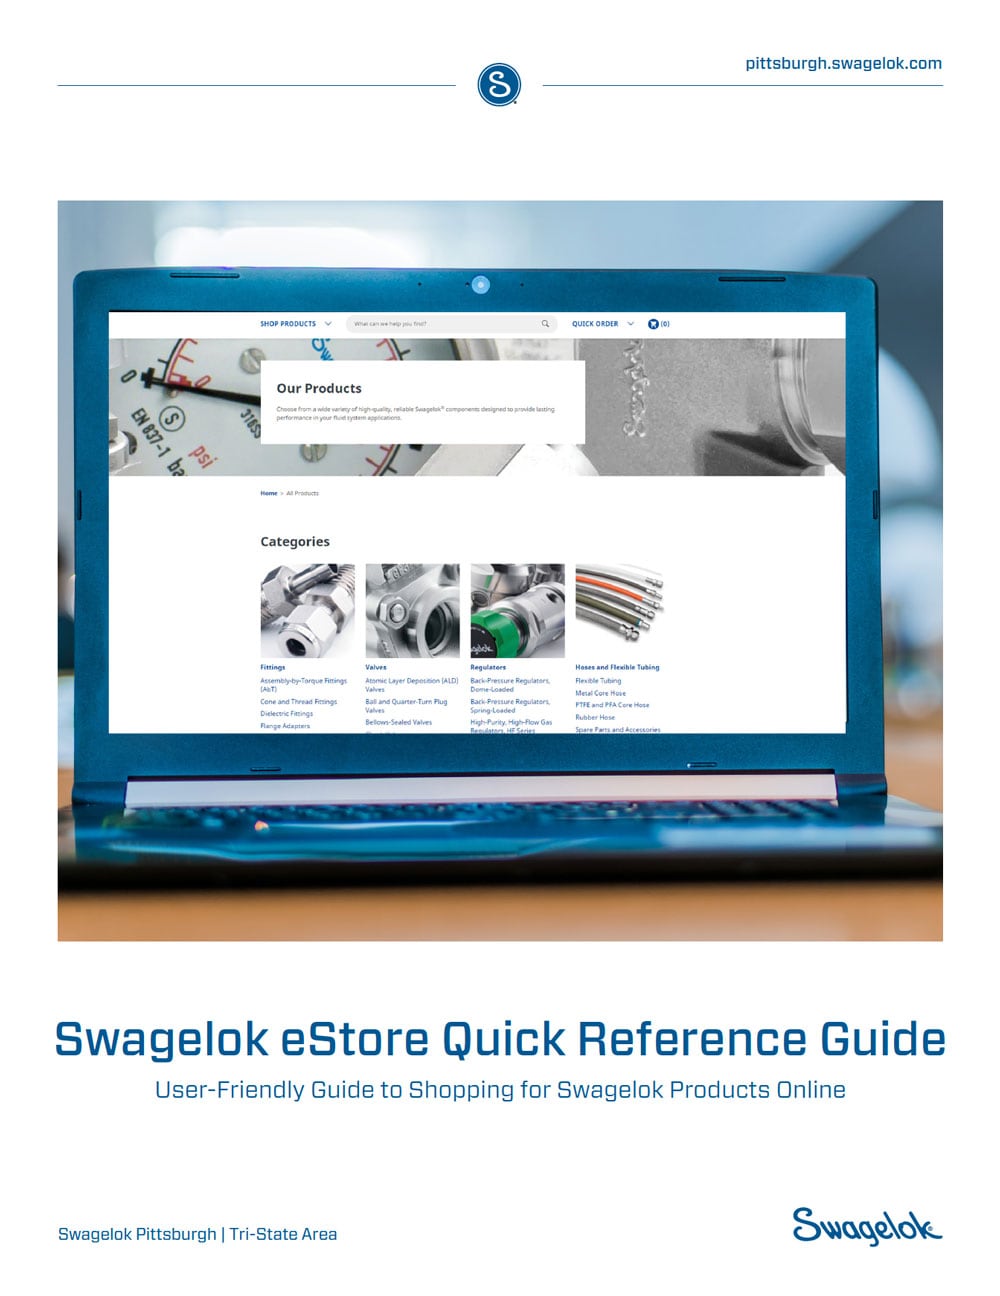 Swagelok eStore Quick Reference Guide